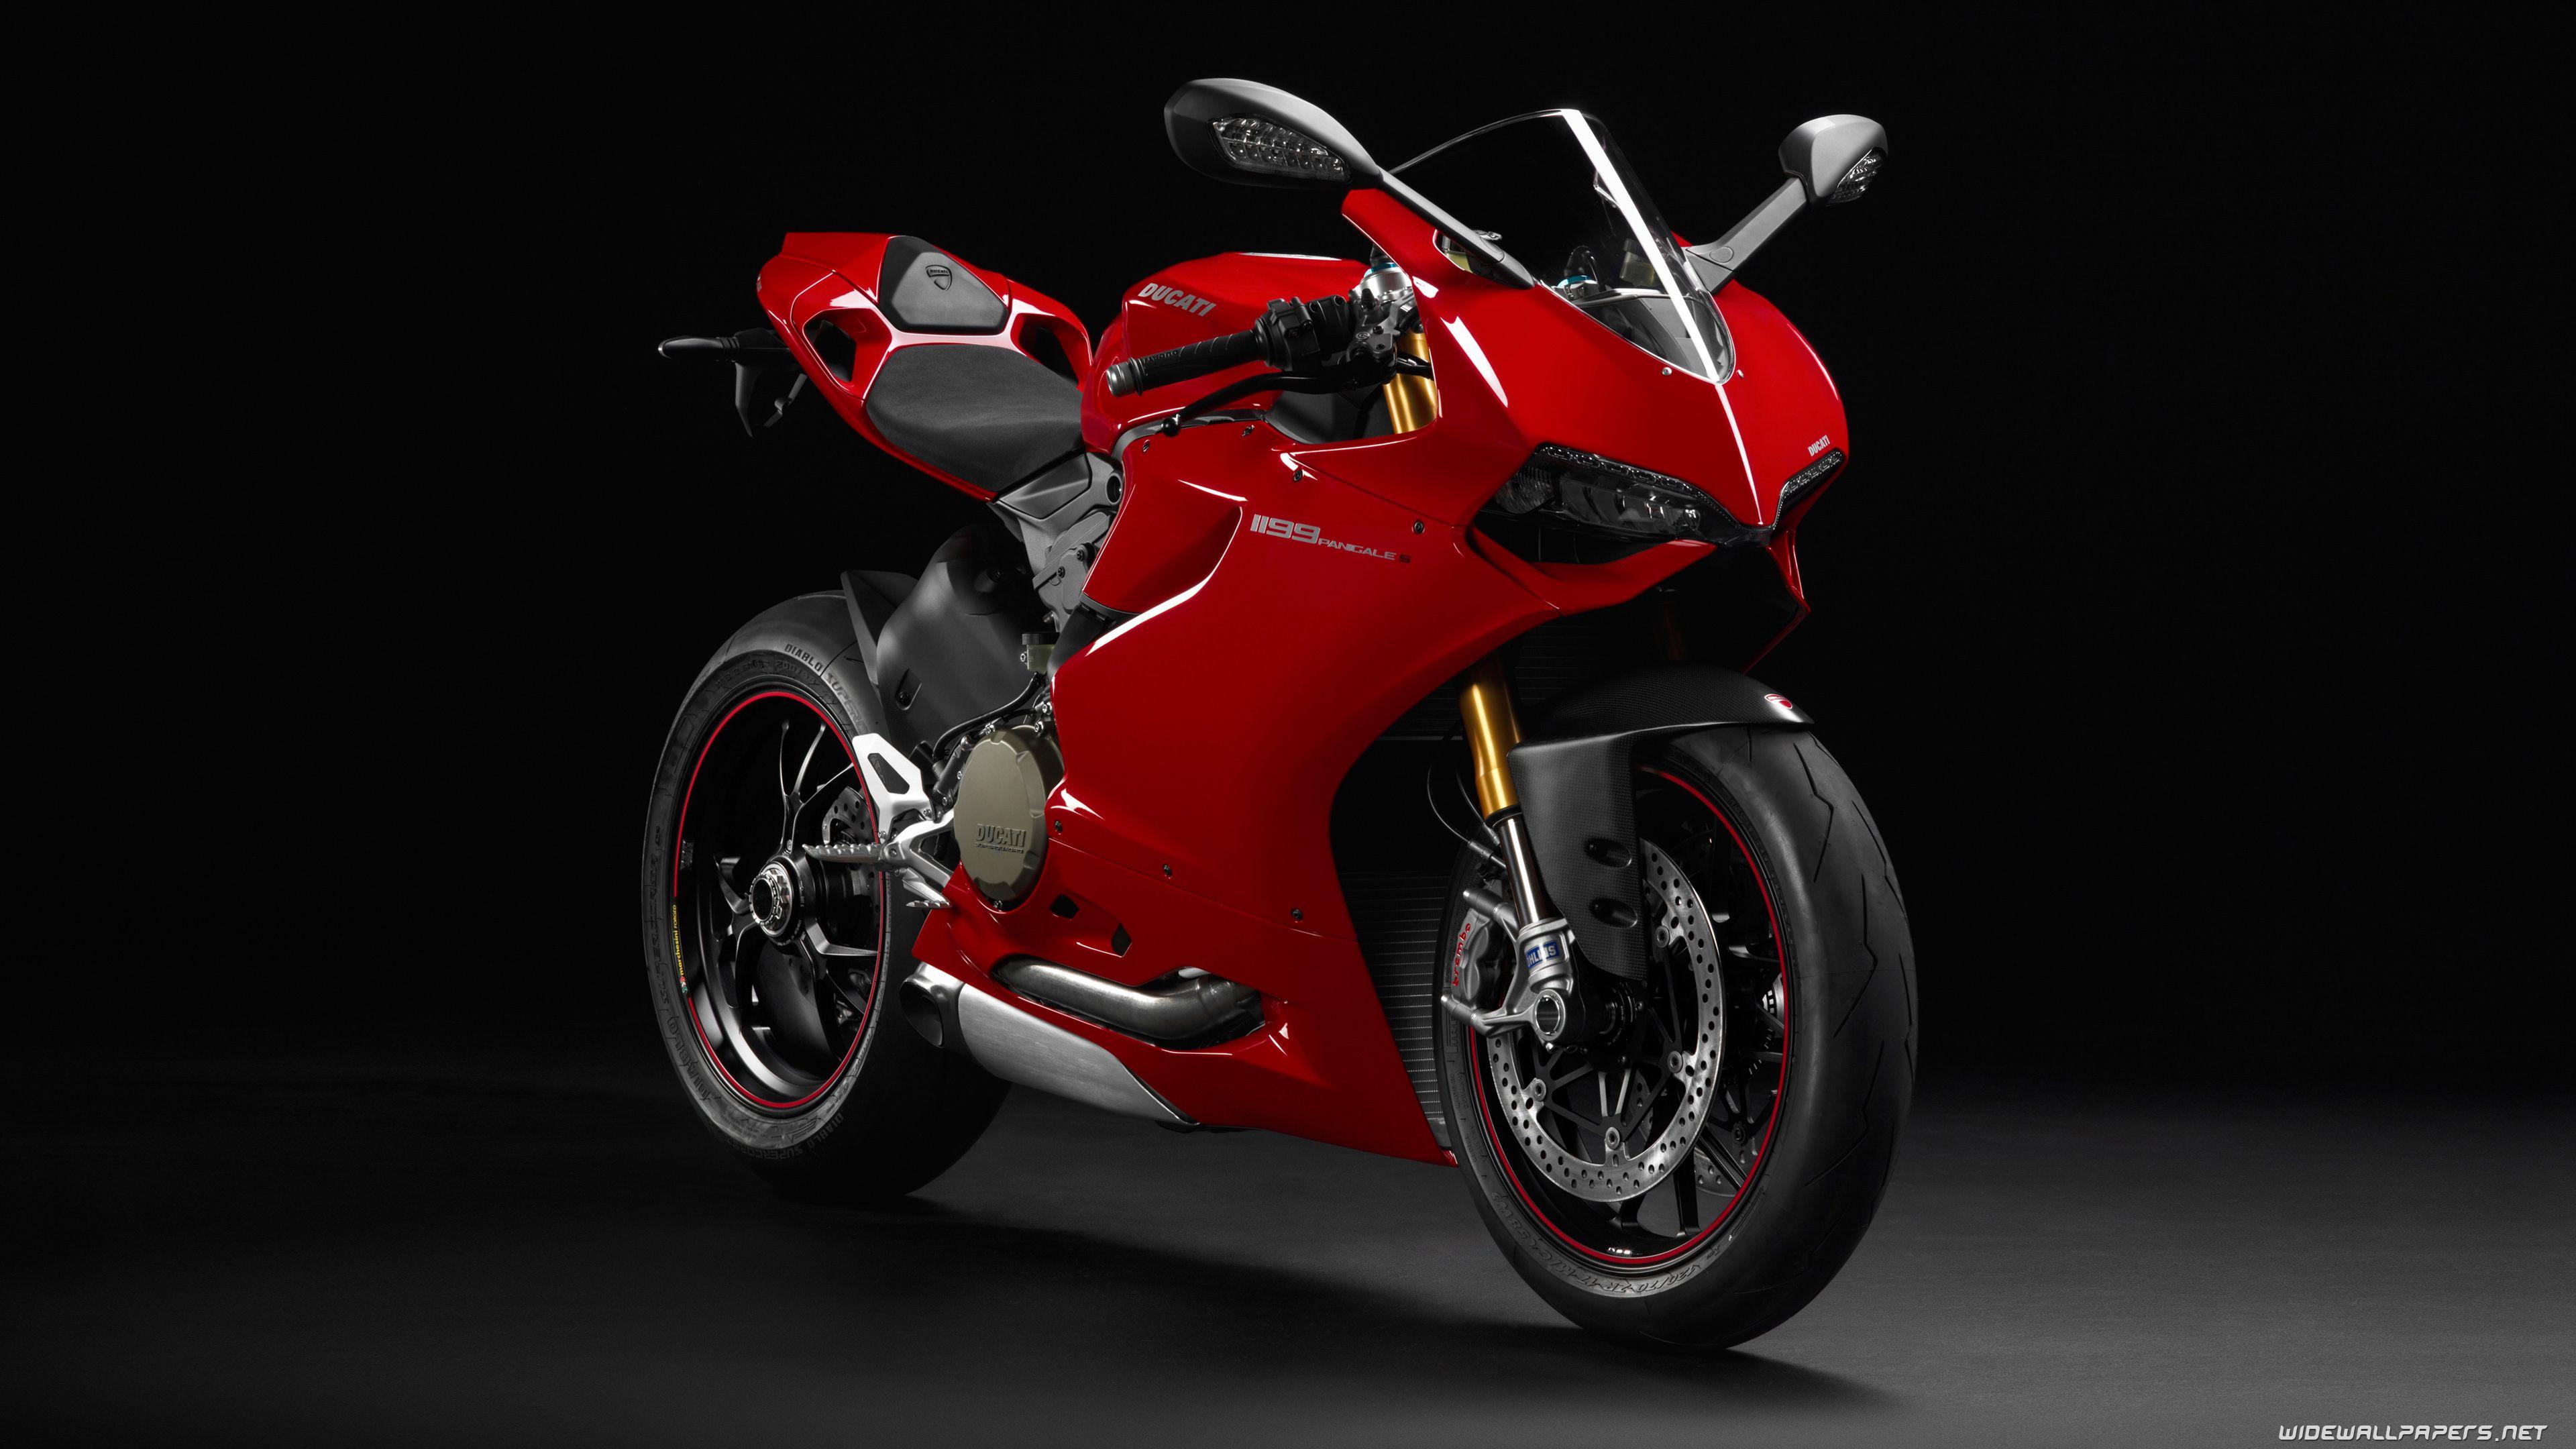 Ducati Superbike 1199 Panigale motorcycle desktop wallpaper 4K Ultra HD